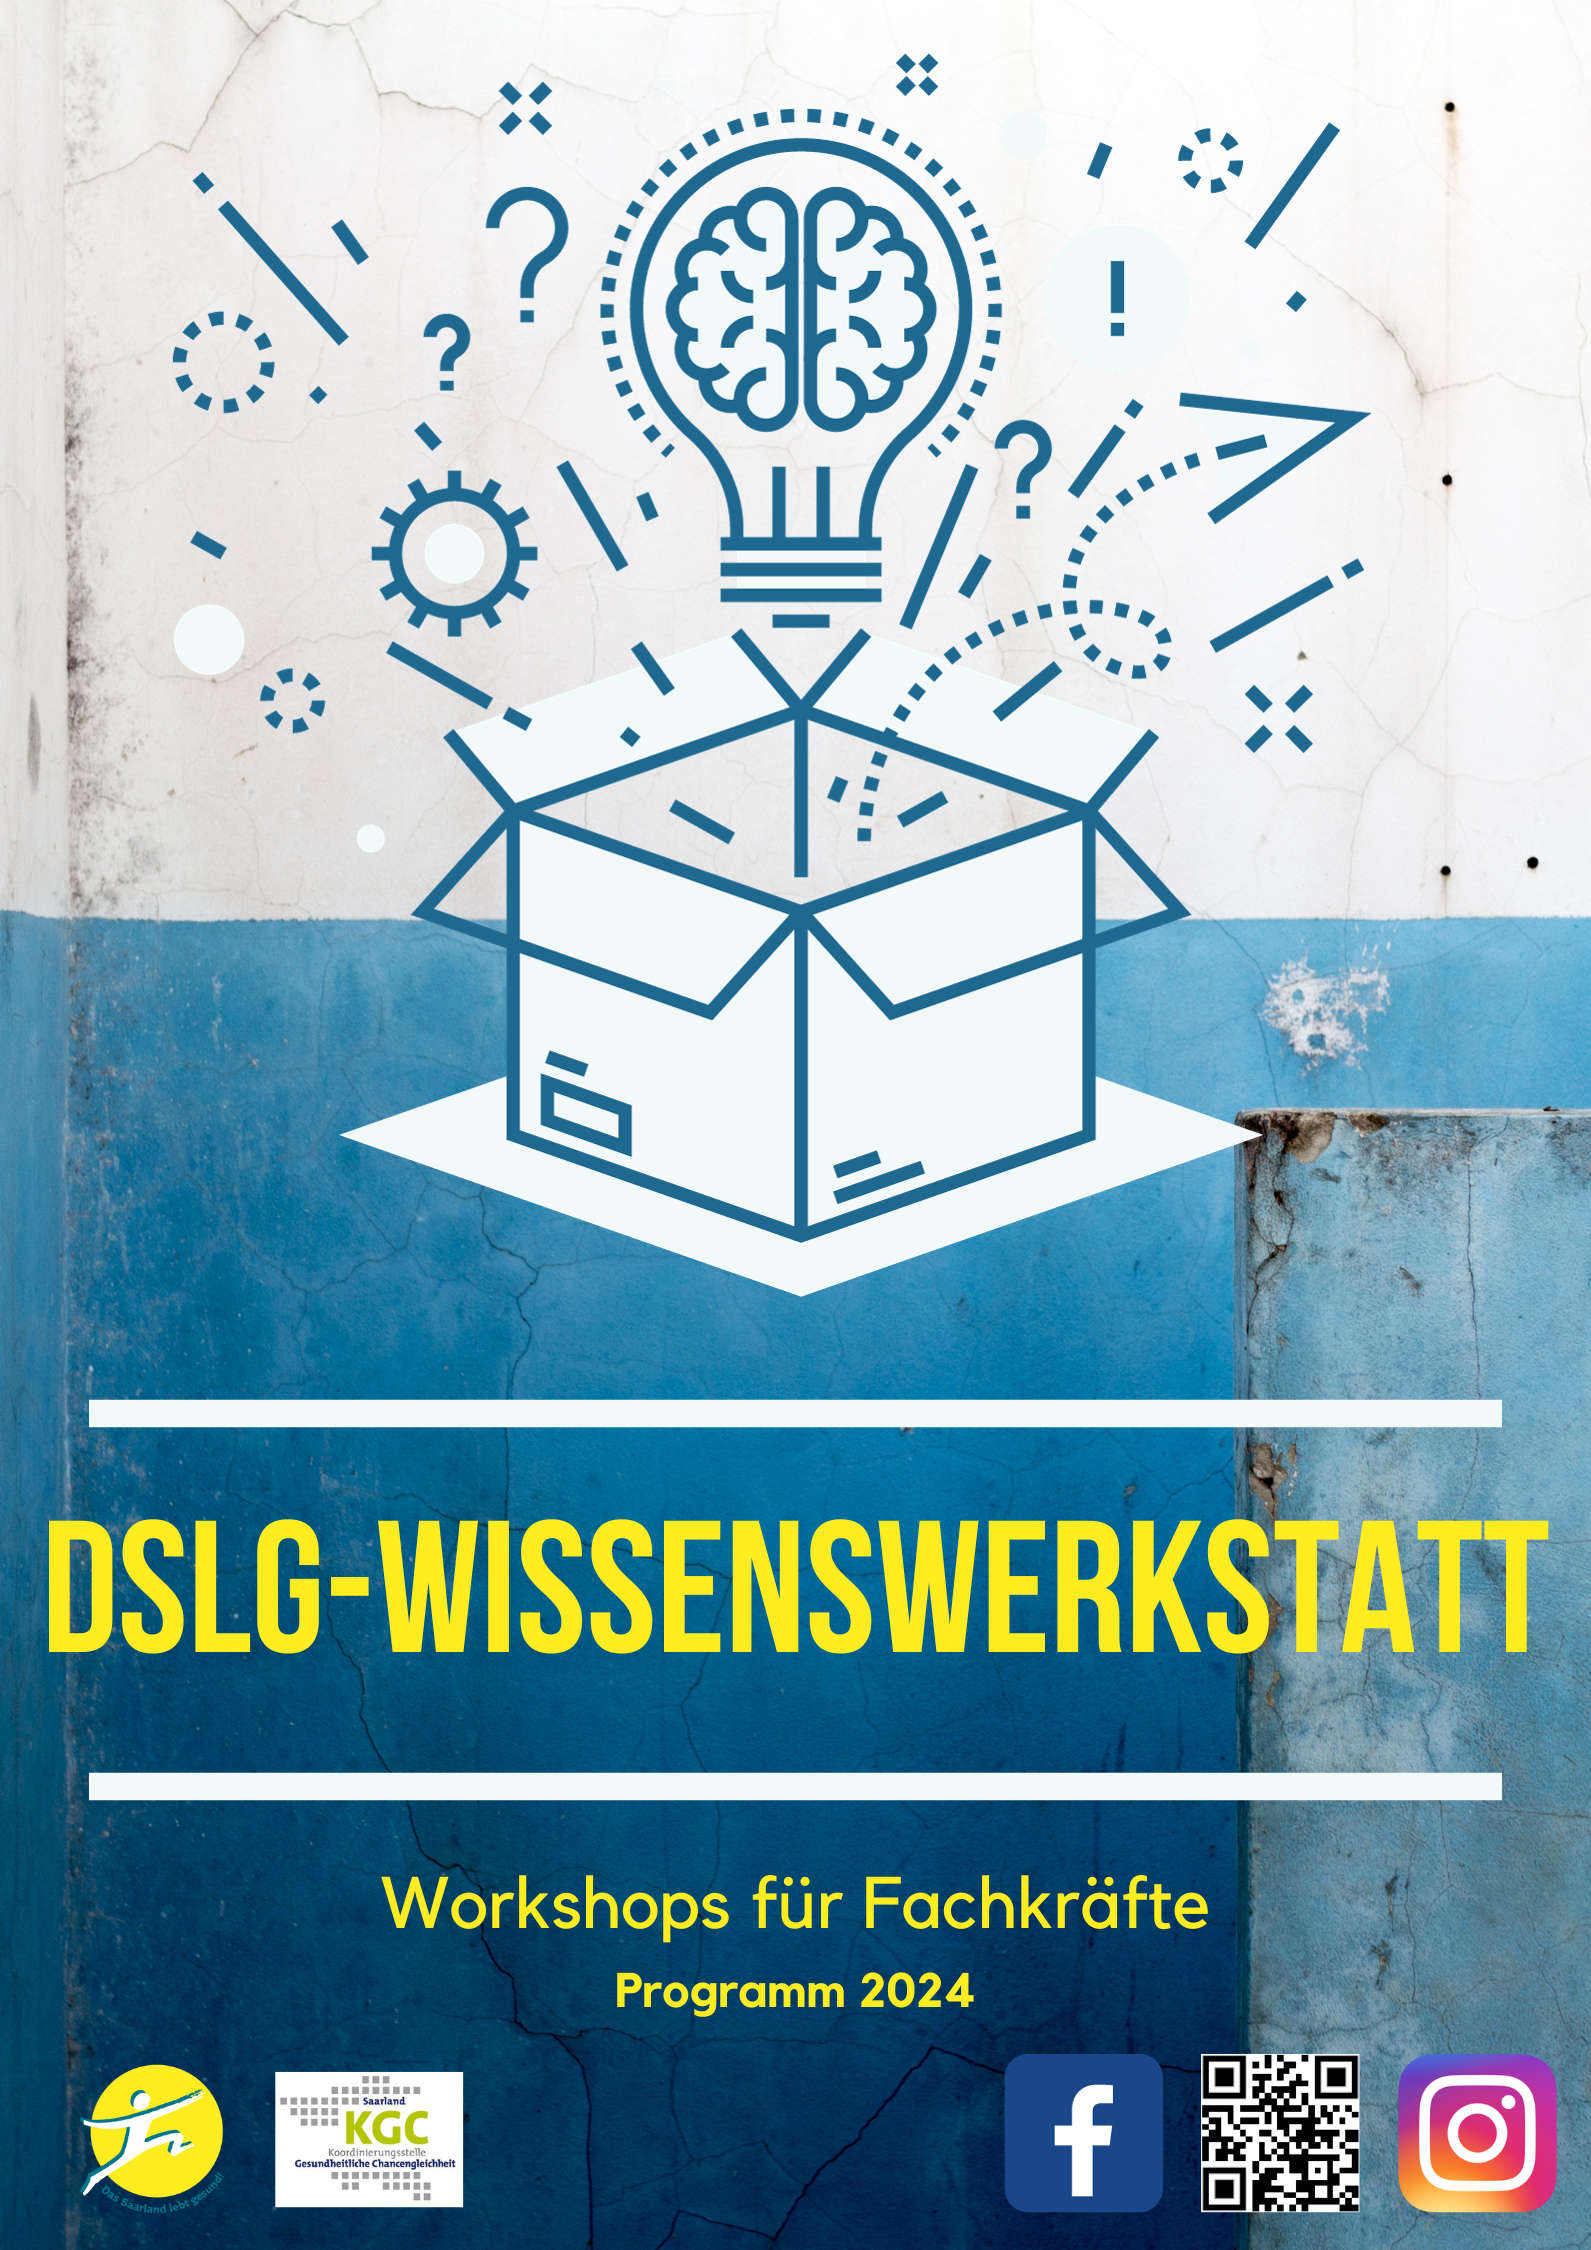 DSLG-Wissenswerkstatt